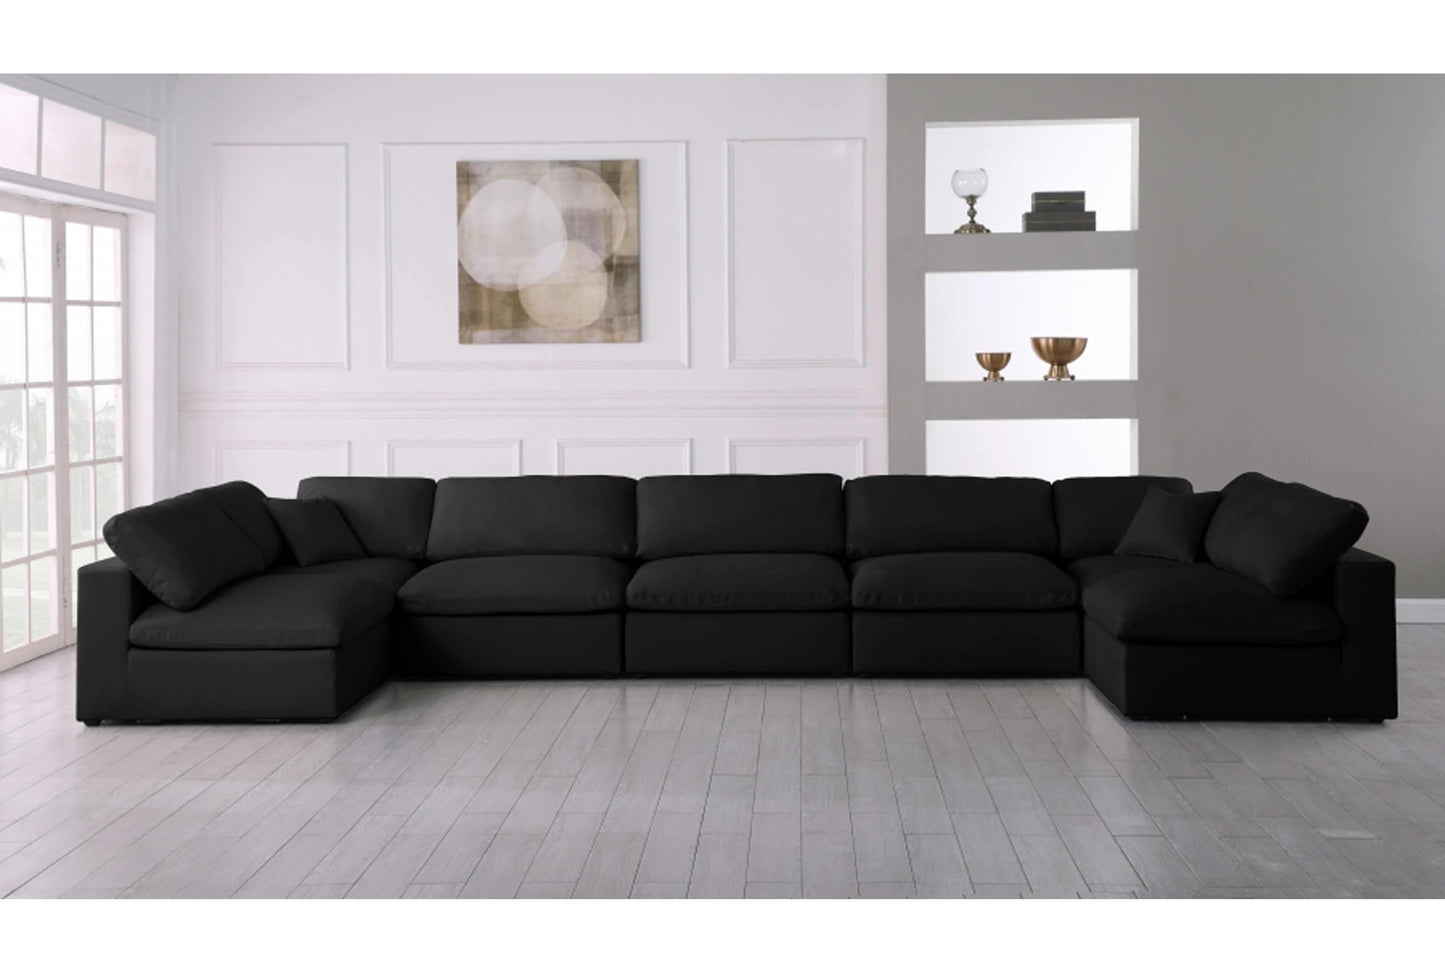 Serene Linen Deluxe Modular Down Filled Cloud-Like Comfort Overstuffed Sectional SKU: 601-Sec7B - Venini Furniture 